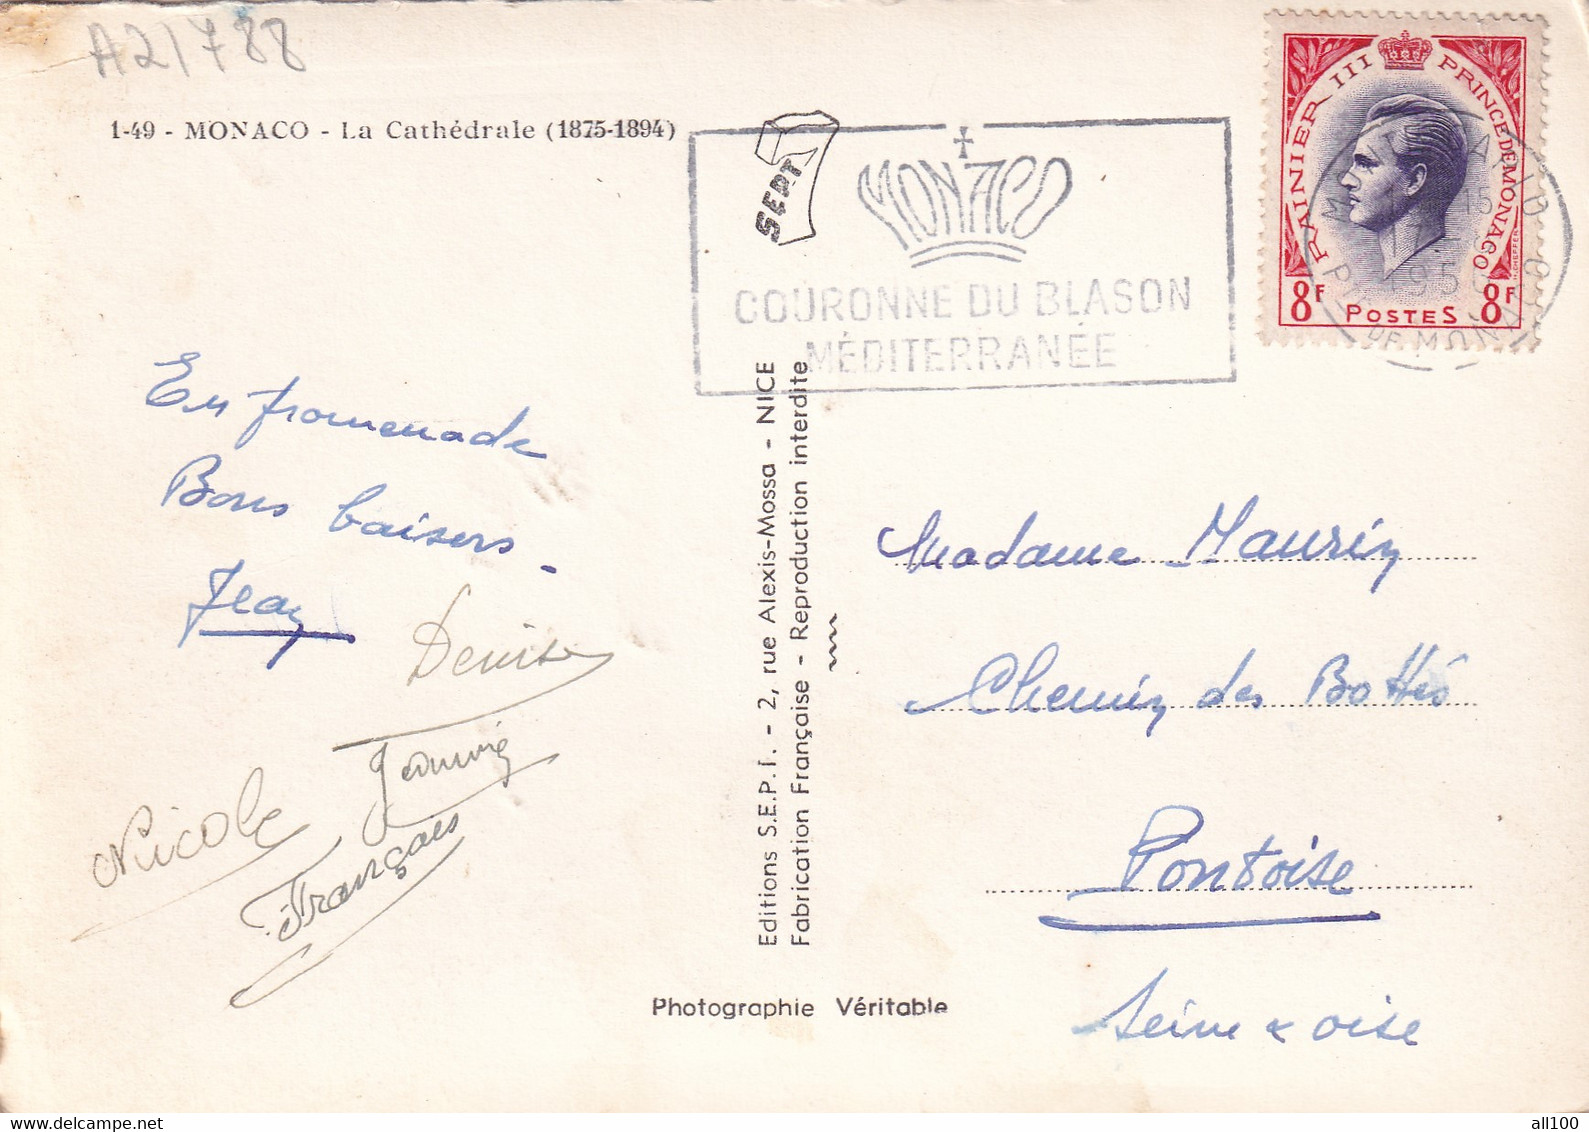 A21788 - MONACO Saint Nicholas Cathedral Post Card Used 1956 Stamp Rainier III Prince De Monaco Sent To France - Cathédrale Notre-Dame-Immaculée